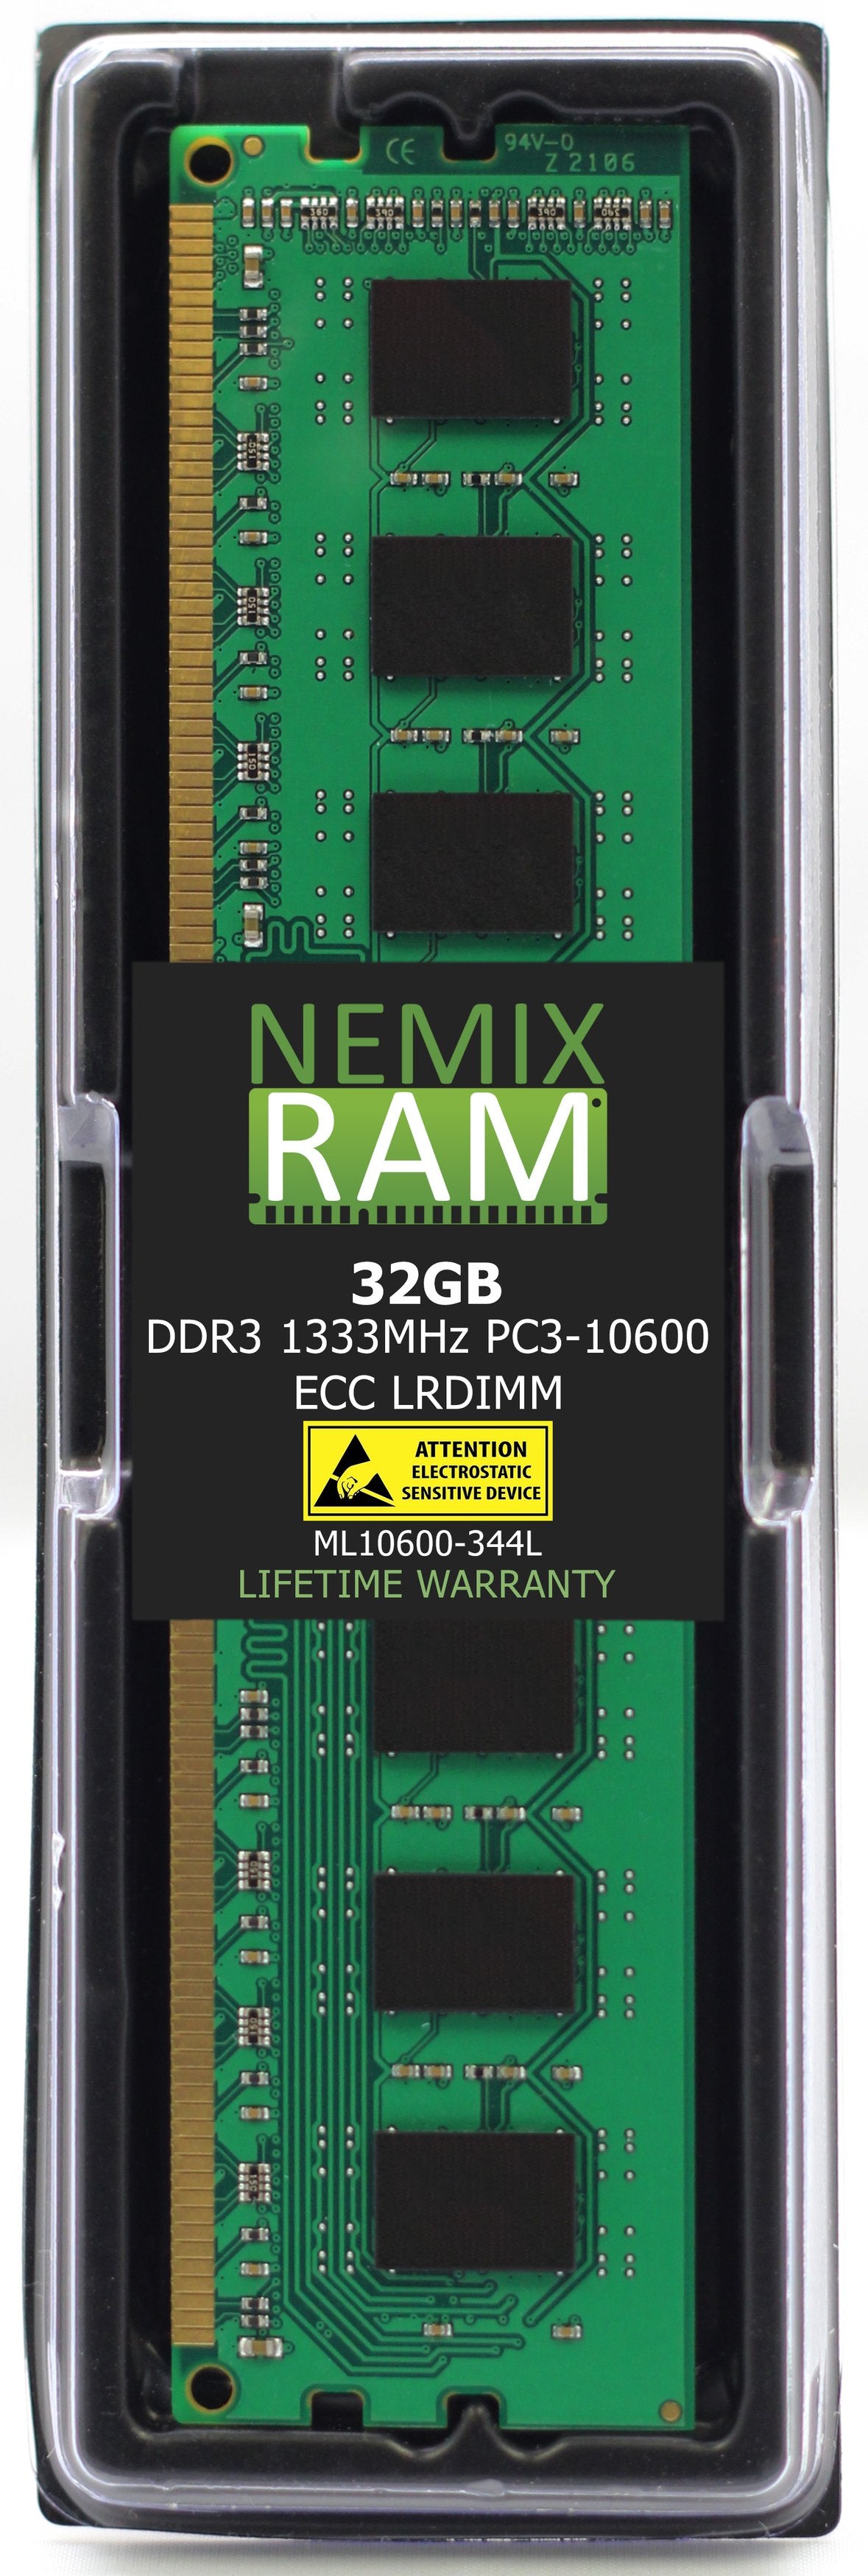 Hynix HMT84GL7BMR4A-H9 32GB DDR3 1333MHZ PC3-10600 LRDIMM Compatible Memory Module